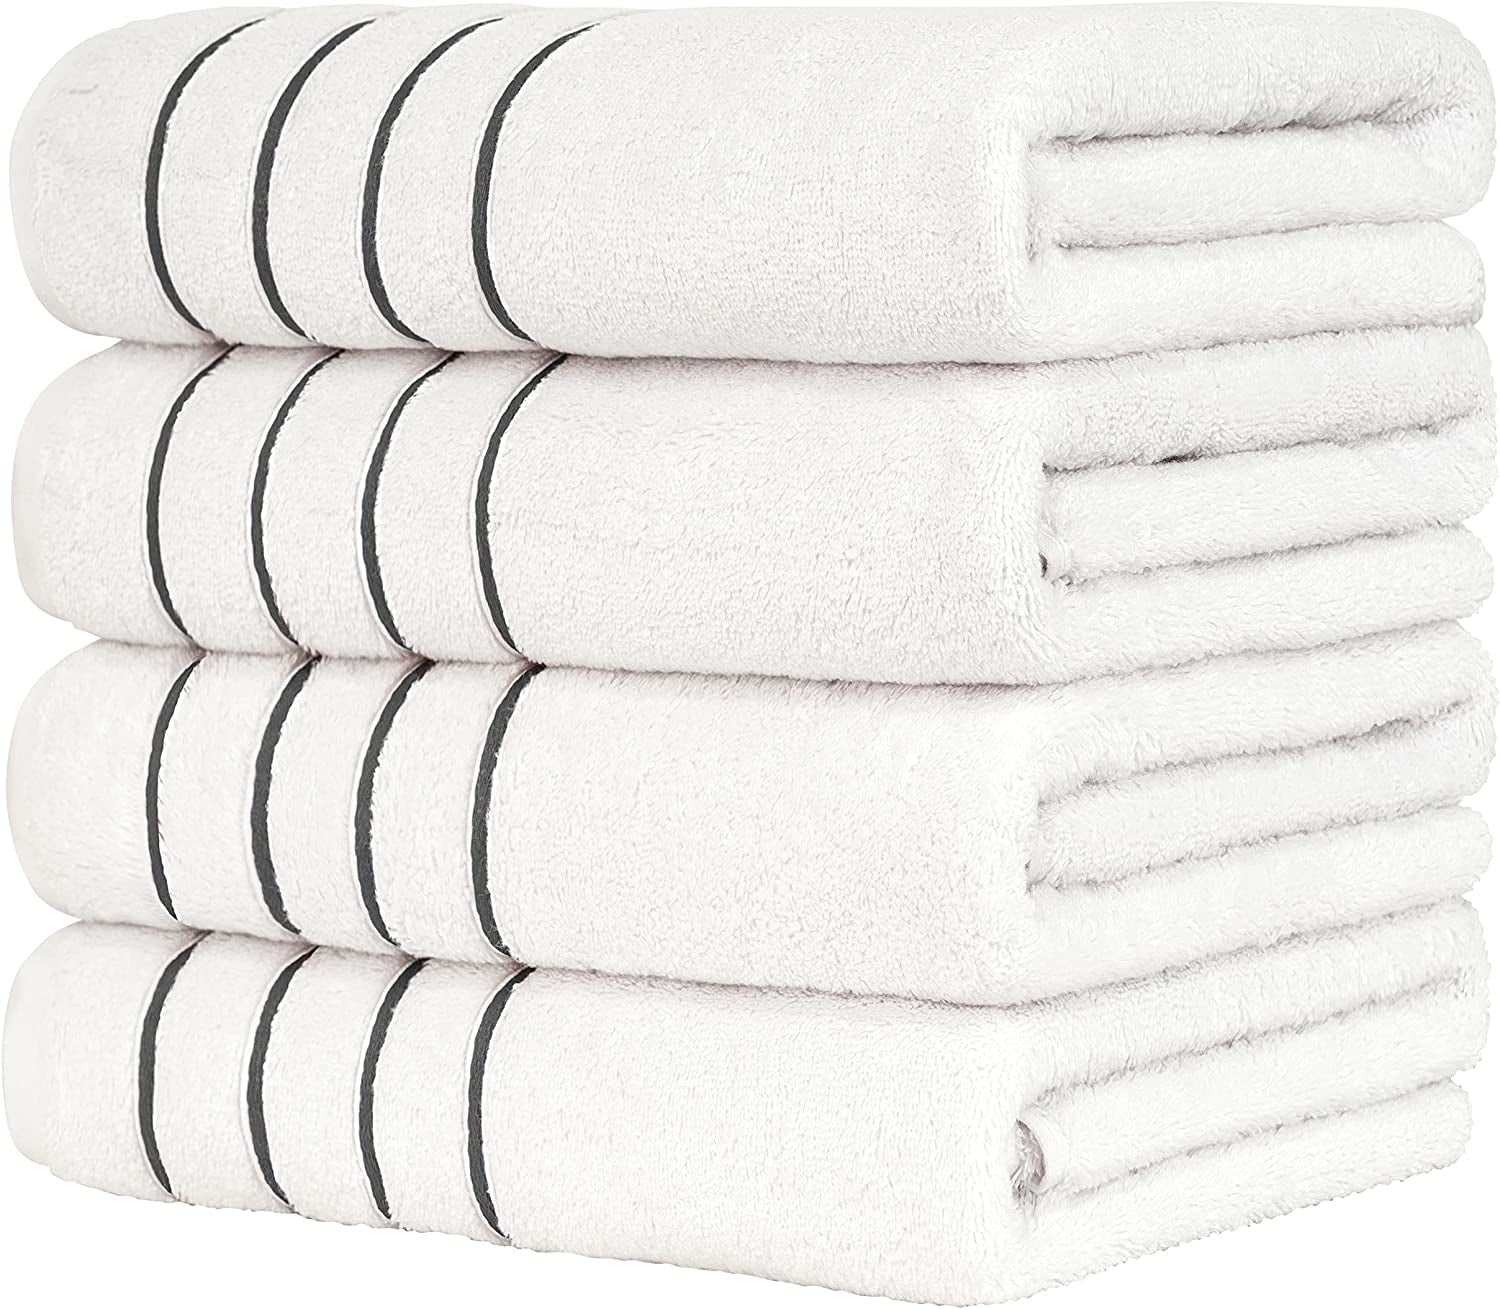 4 Packed White Bath Towel Set, 100% Turkish Cotton Bath Towels, 27X54 Inturkish Bath Towel Set for Bathroom, Dark Gray